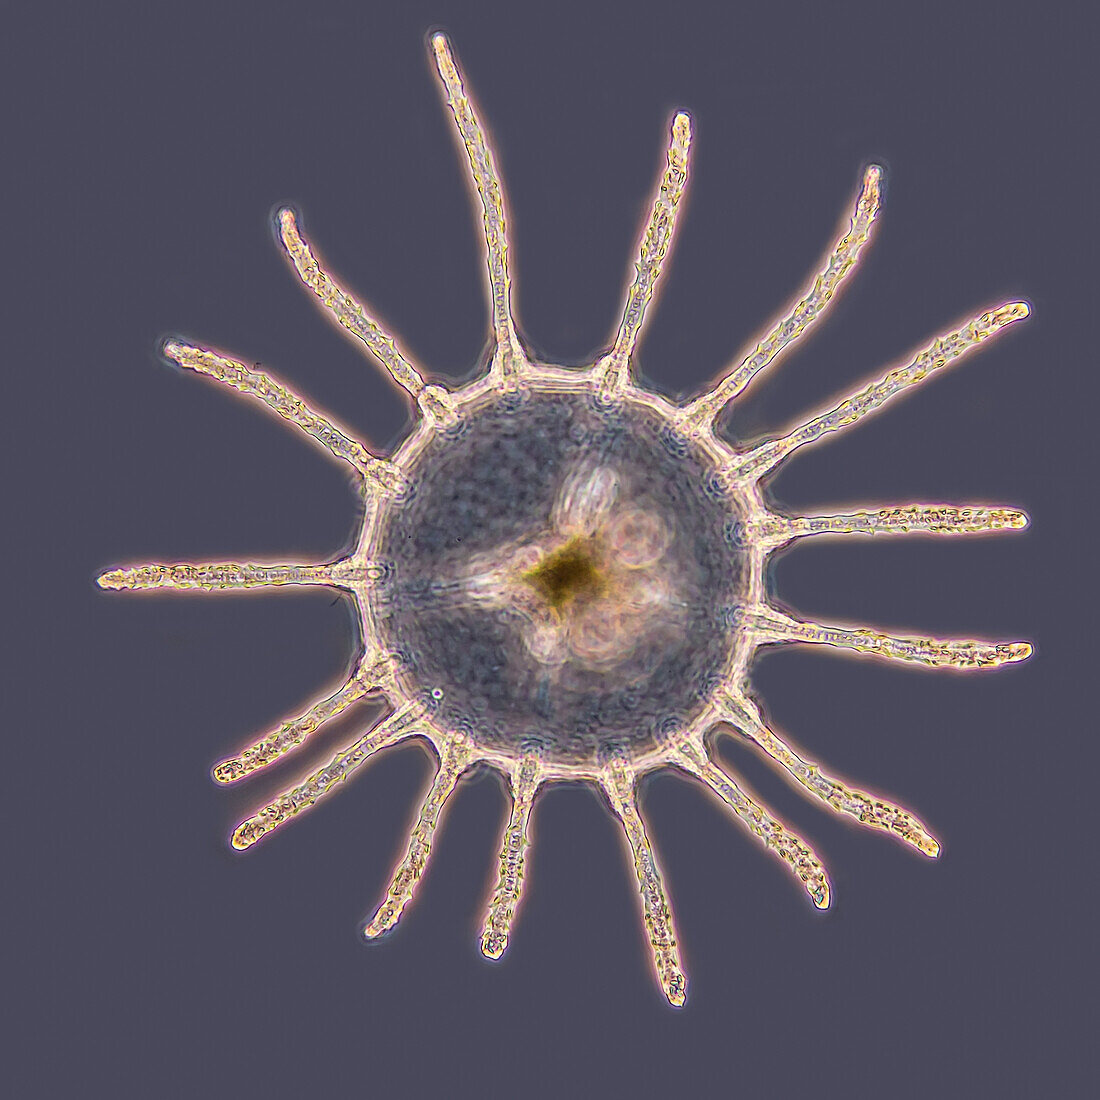 Medusa stage of Obelia sp. hydroid, light micrograph